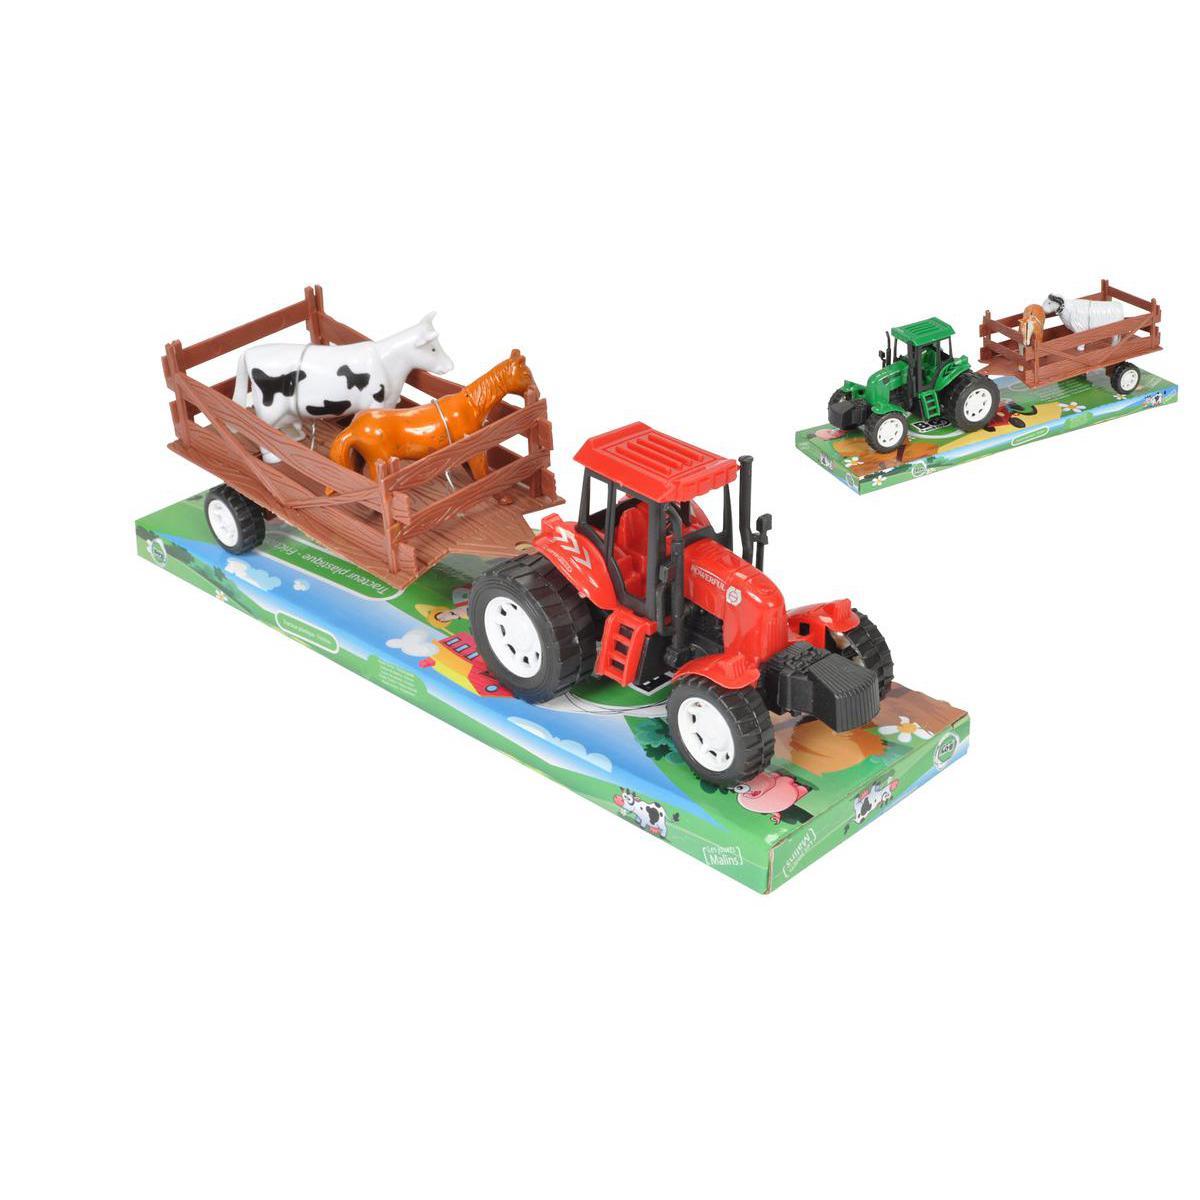 Tracteur + remorque + animaux - Plastique - 28 cm - Rouge, Vert